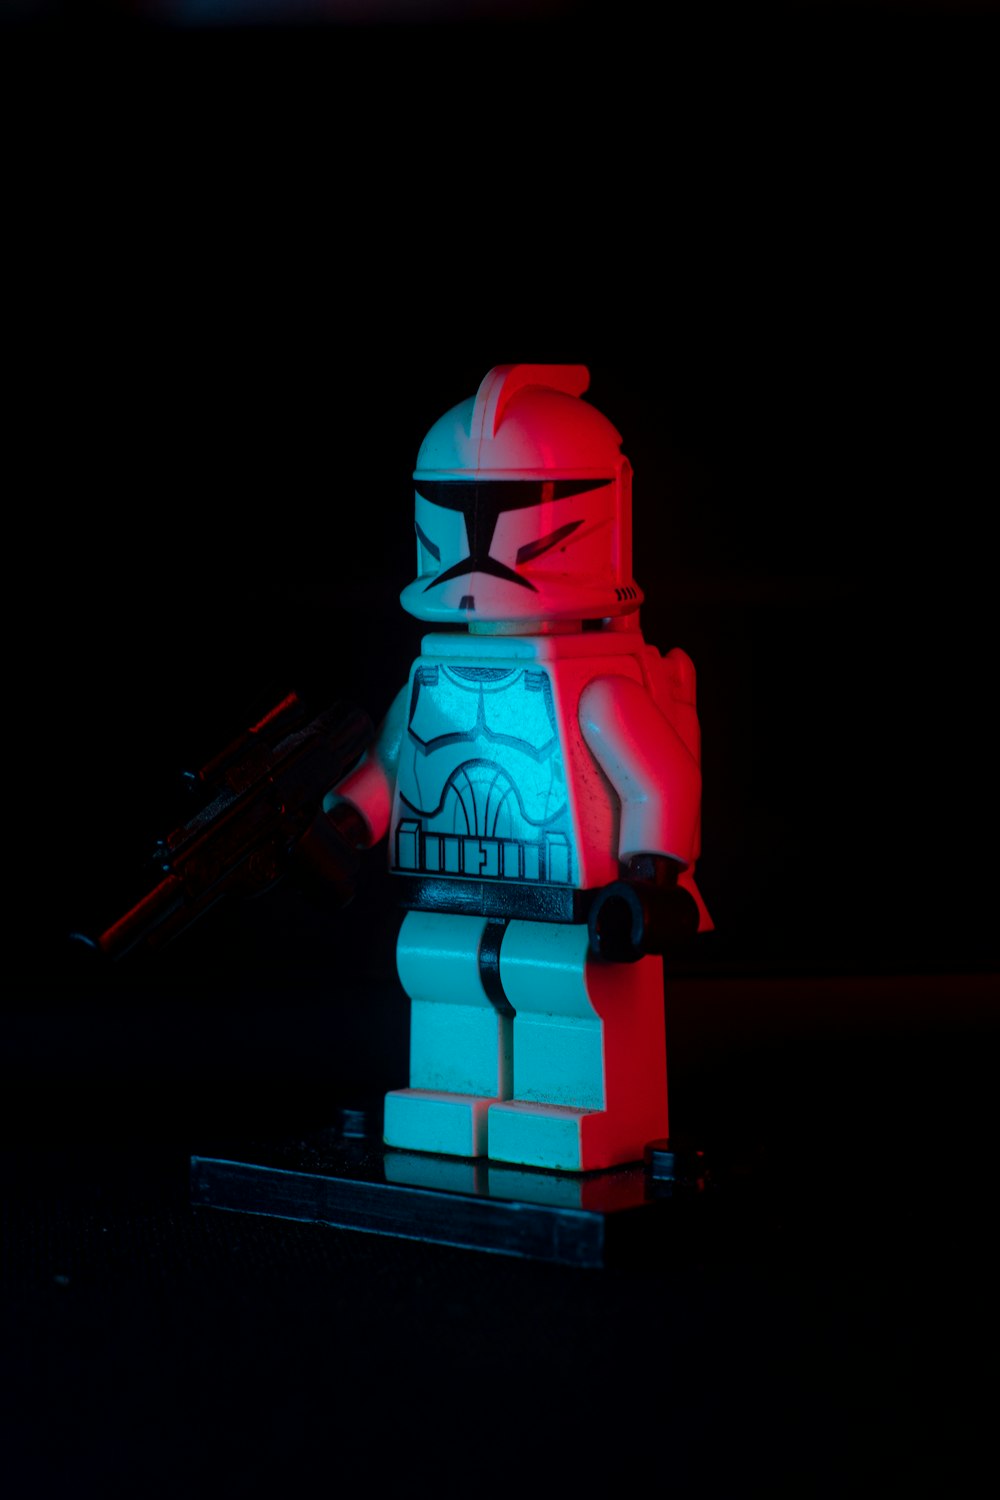 a lego star wars character holding a gun